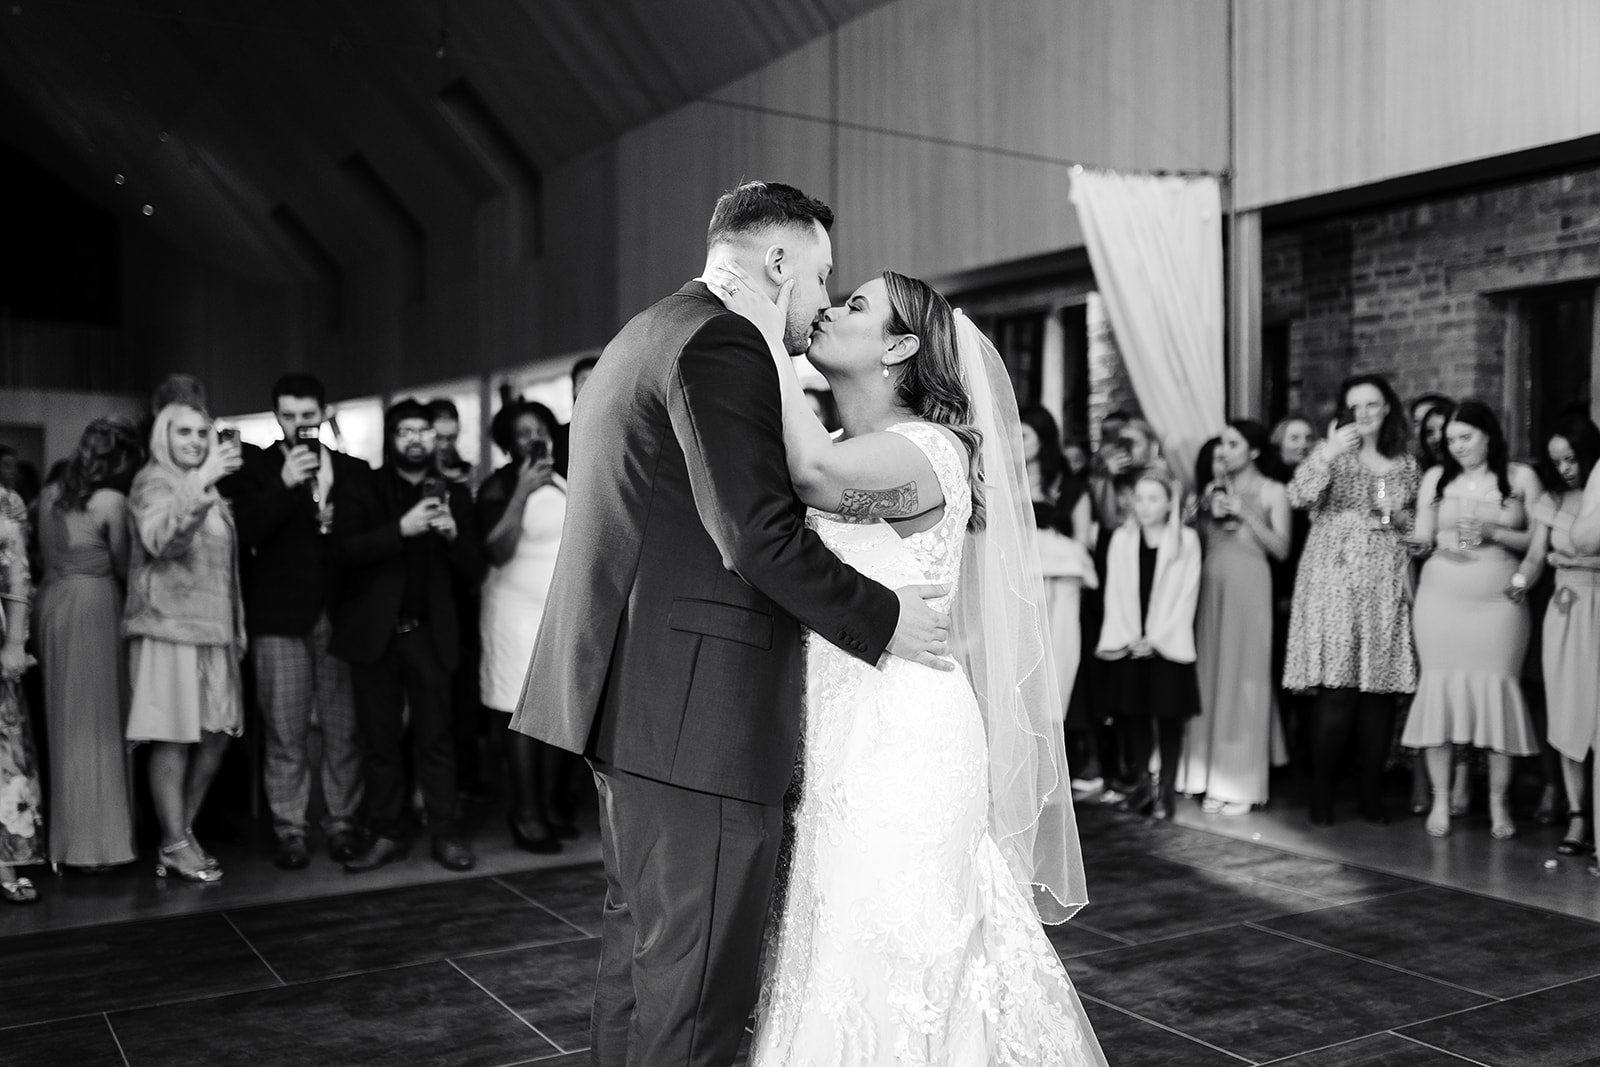 Bride and groom kiss on dancefloor